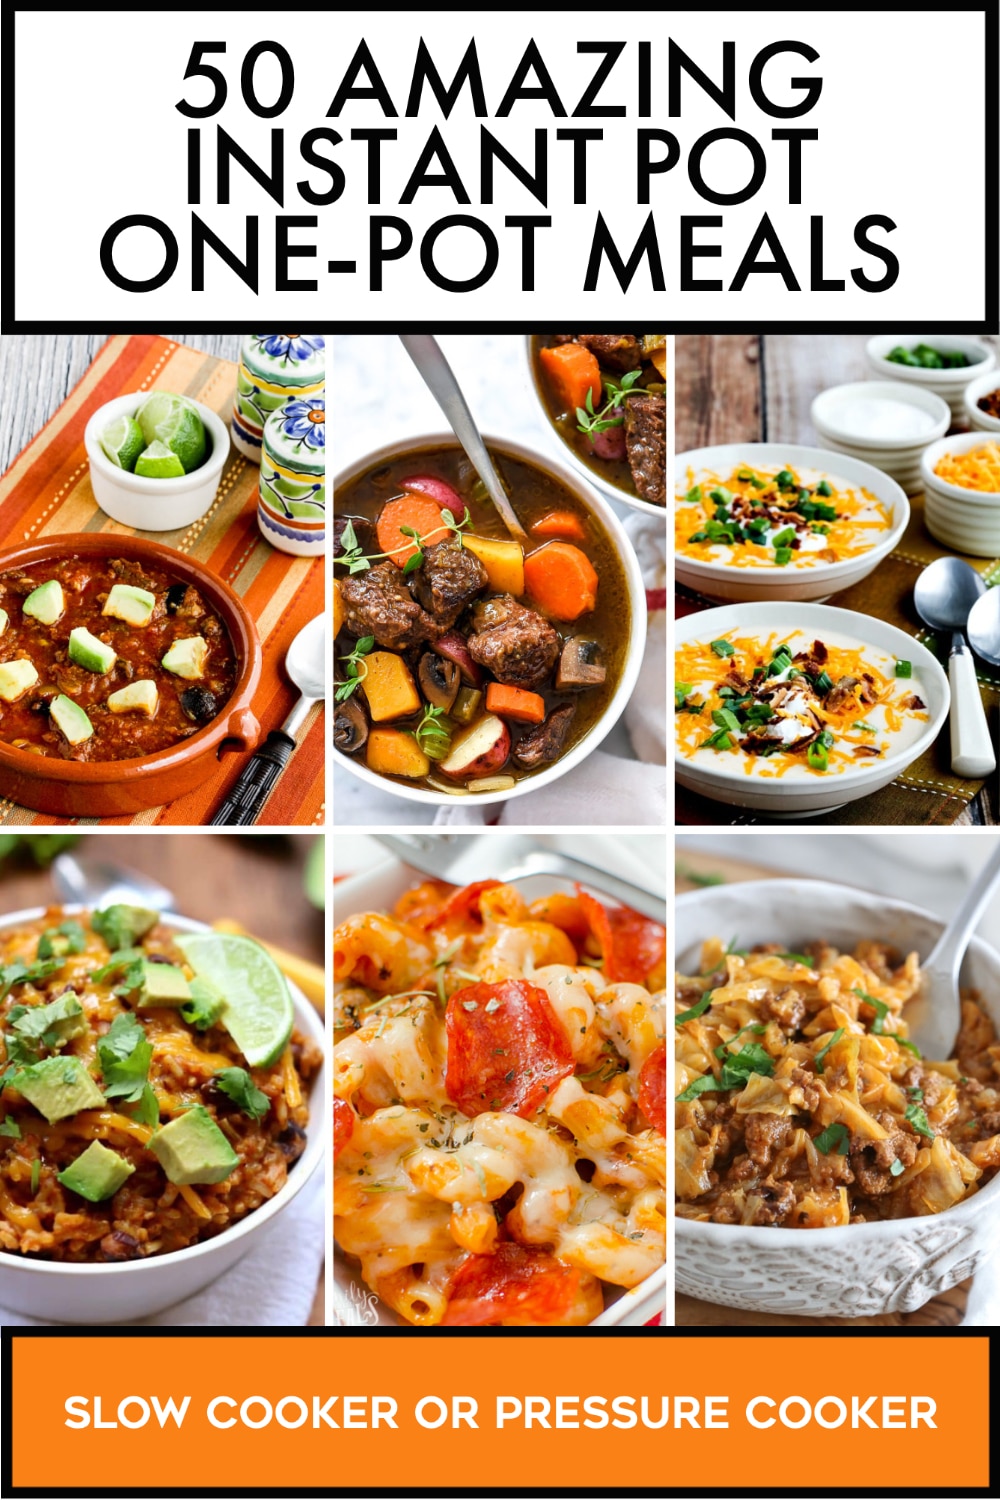 Pinterest image of 50 Amazing Instant Pot One-Pot Meals